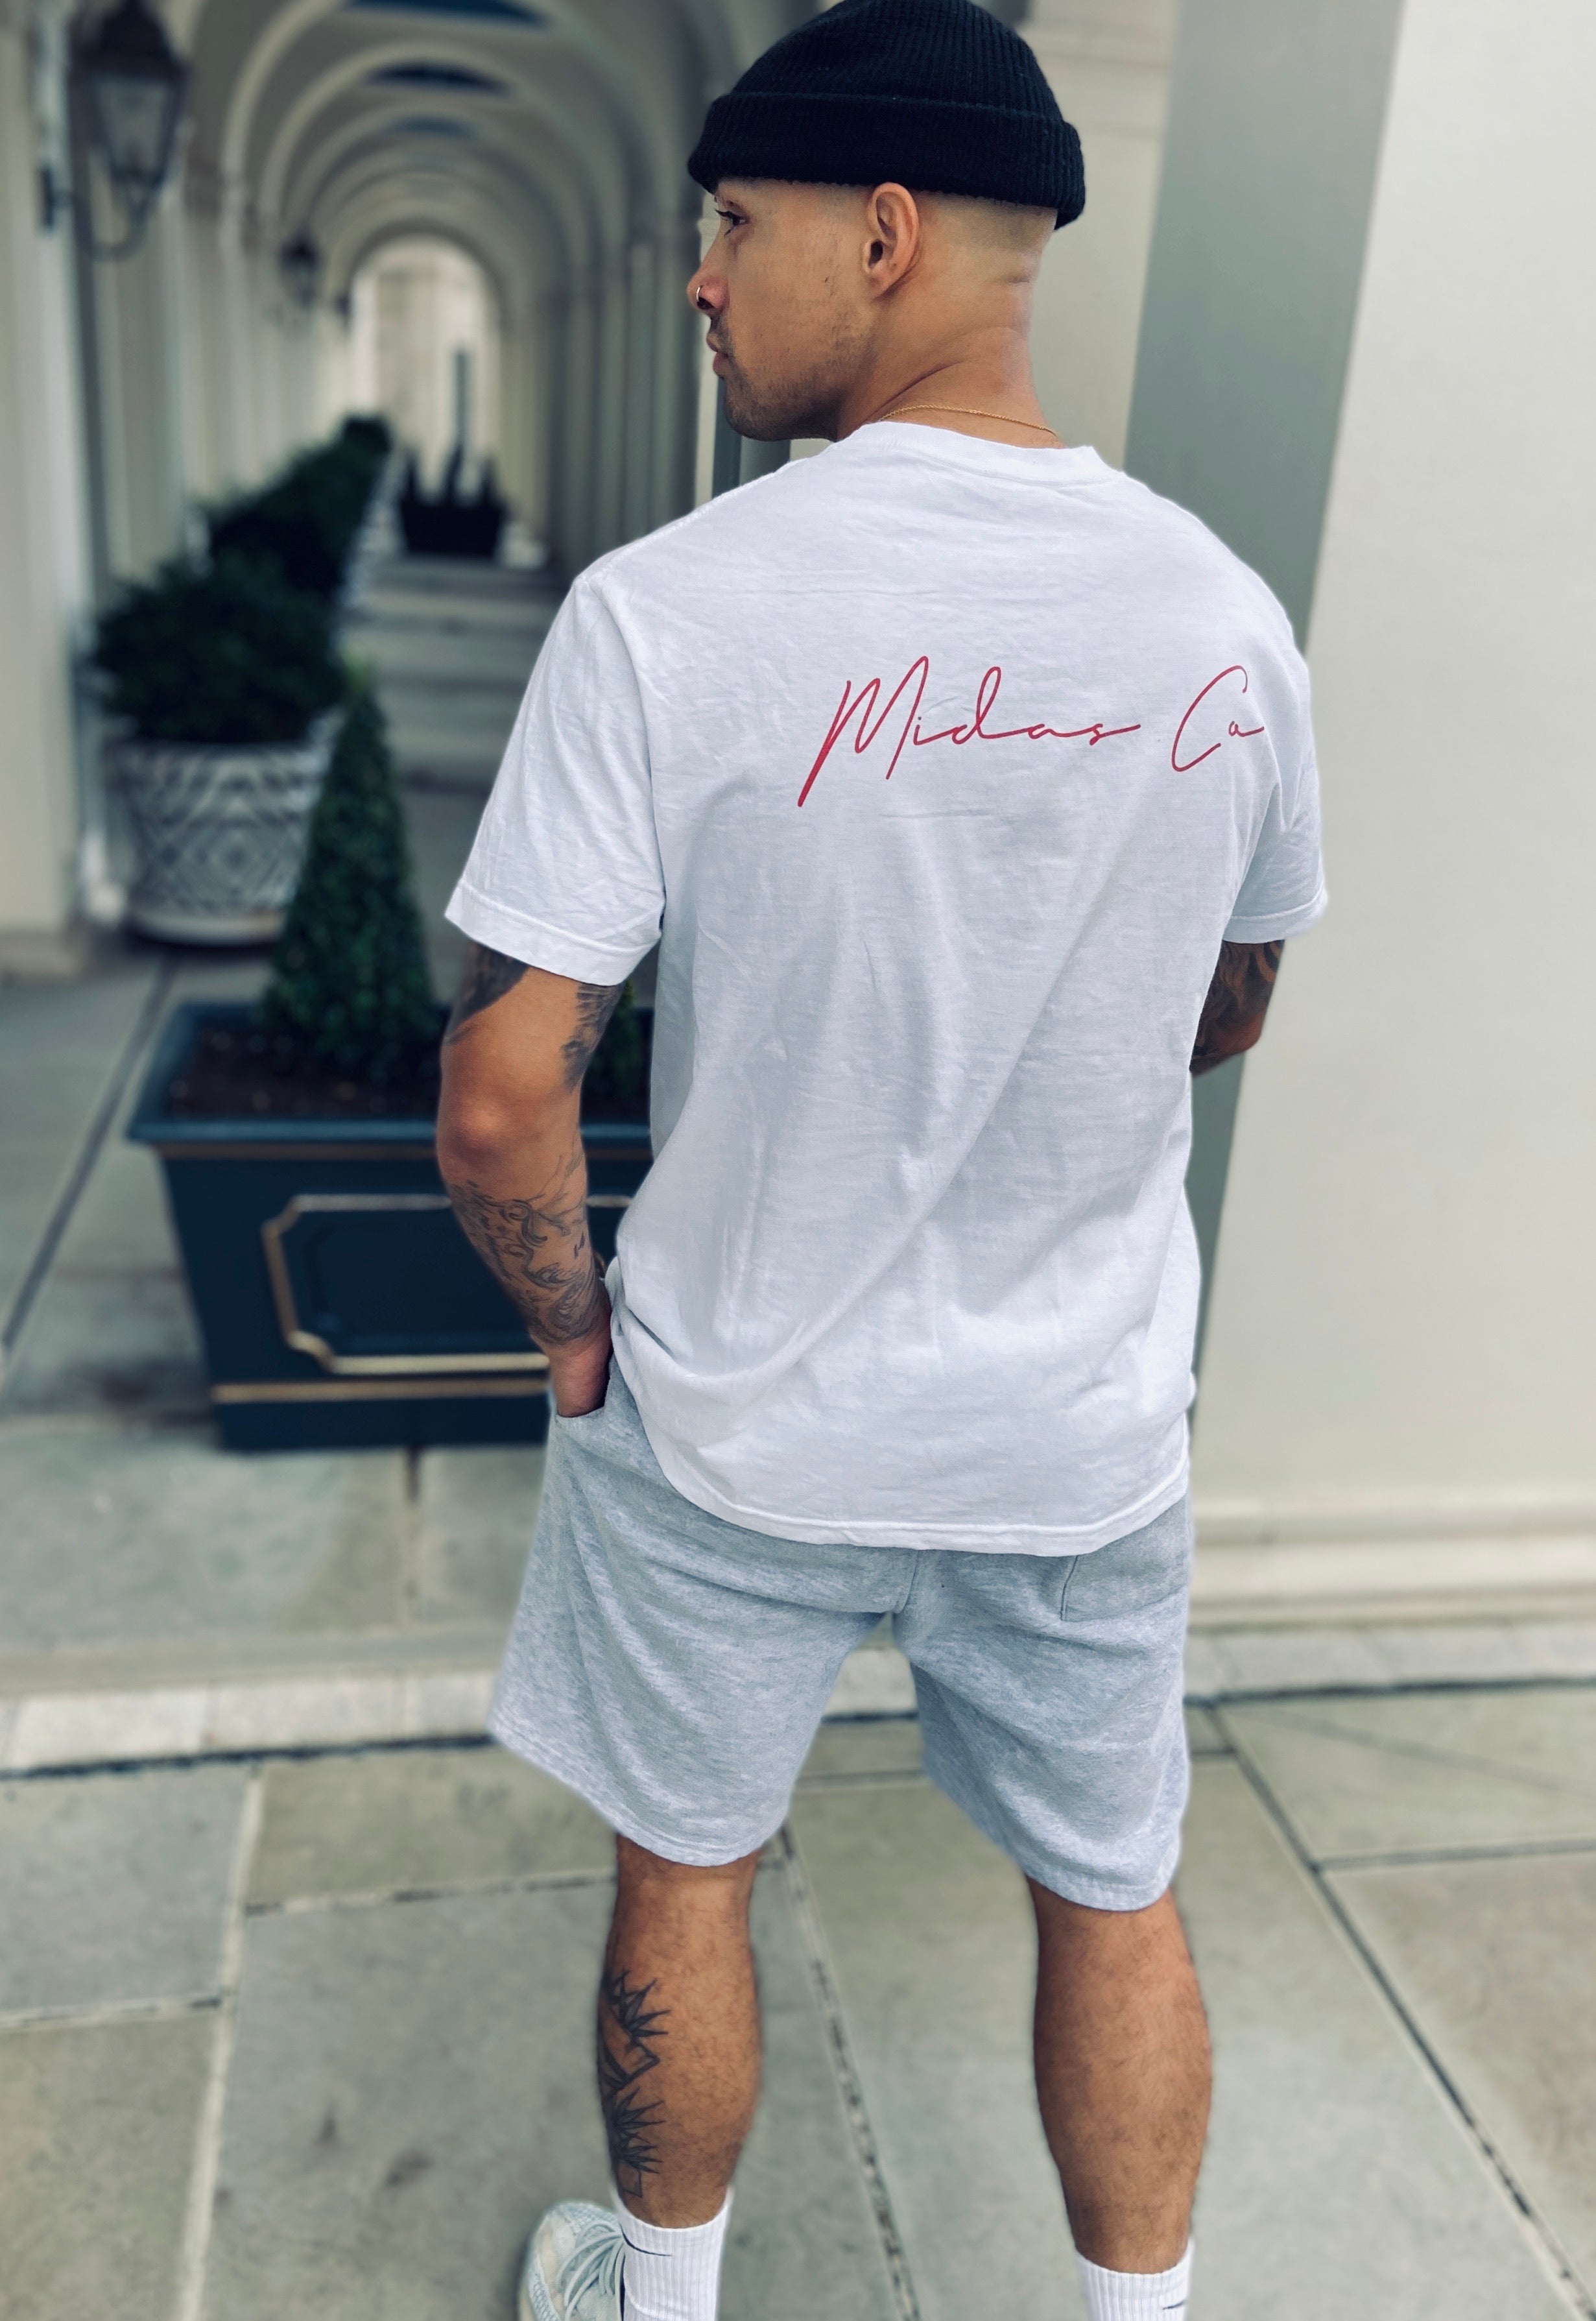 Midas Co Signature T Shirt - White / Red